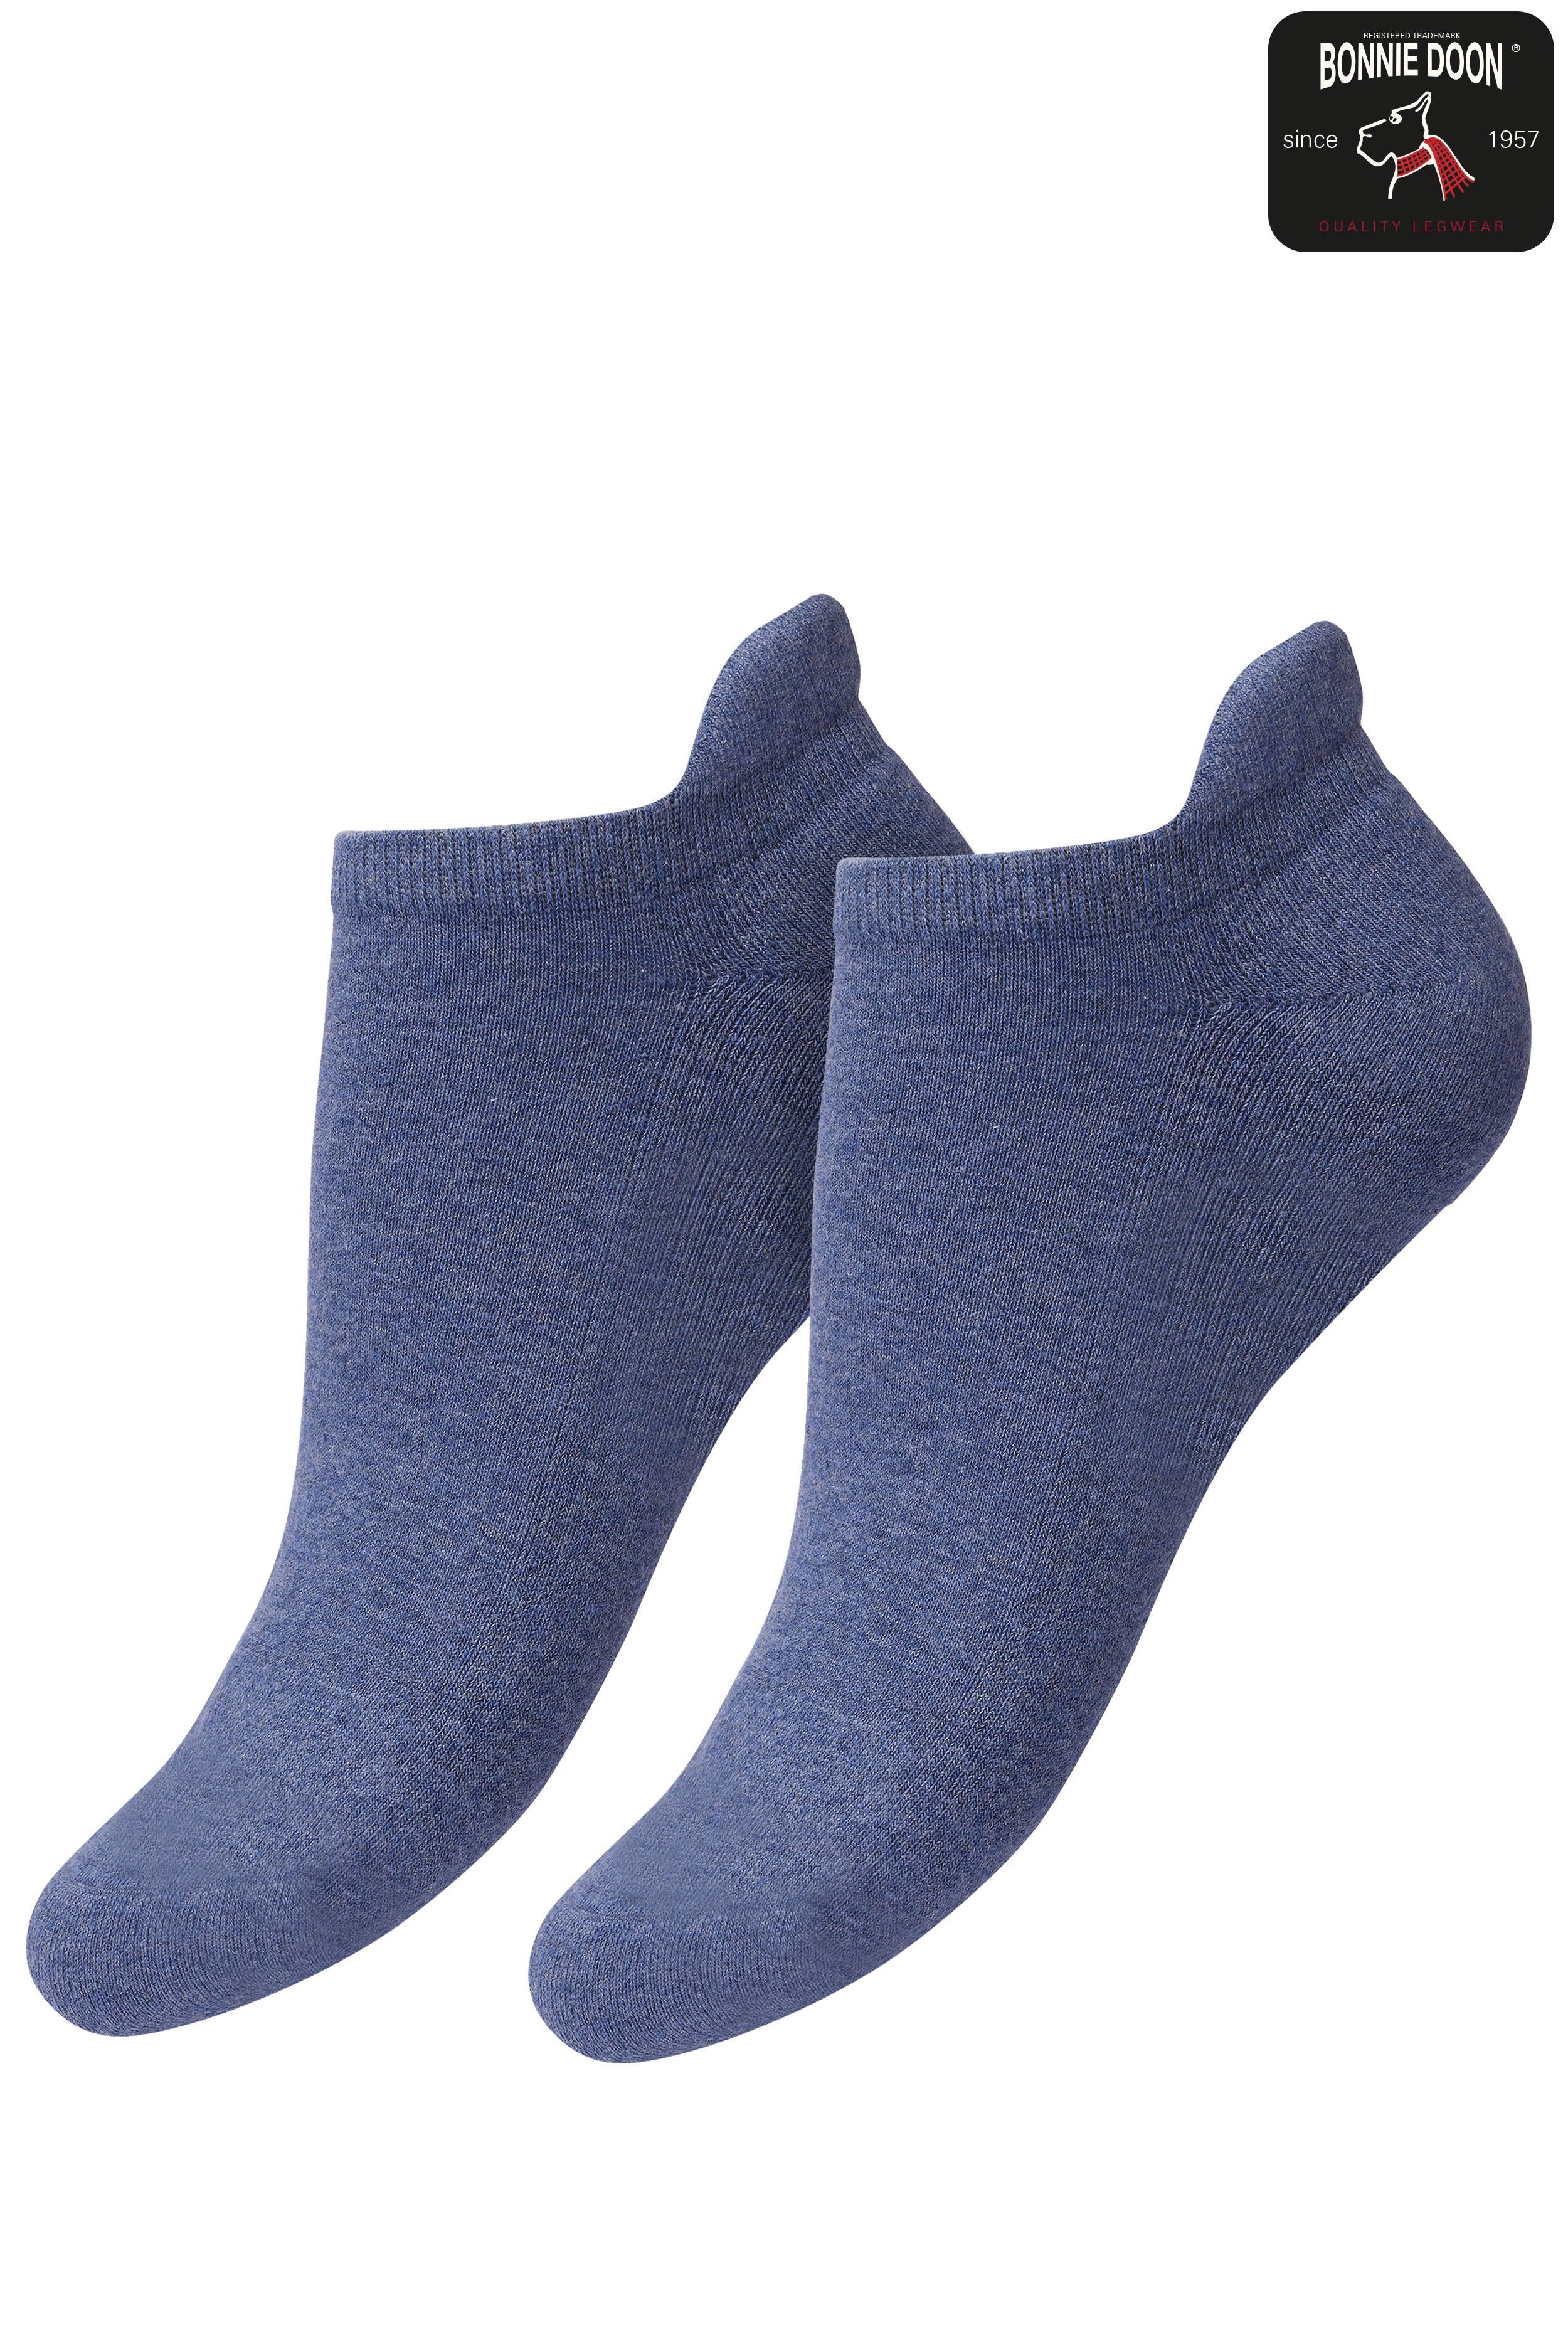 Cushion Short socks (2 paar) Jeans heather